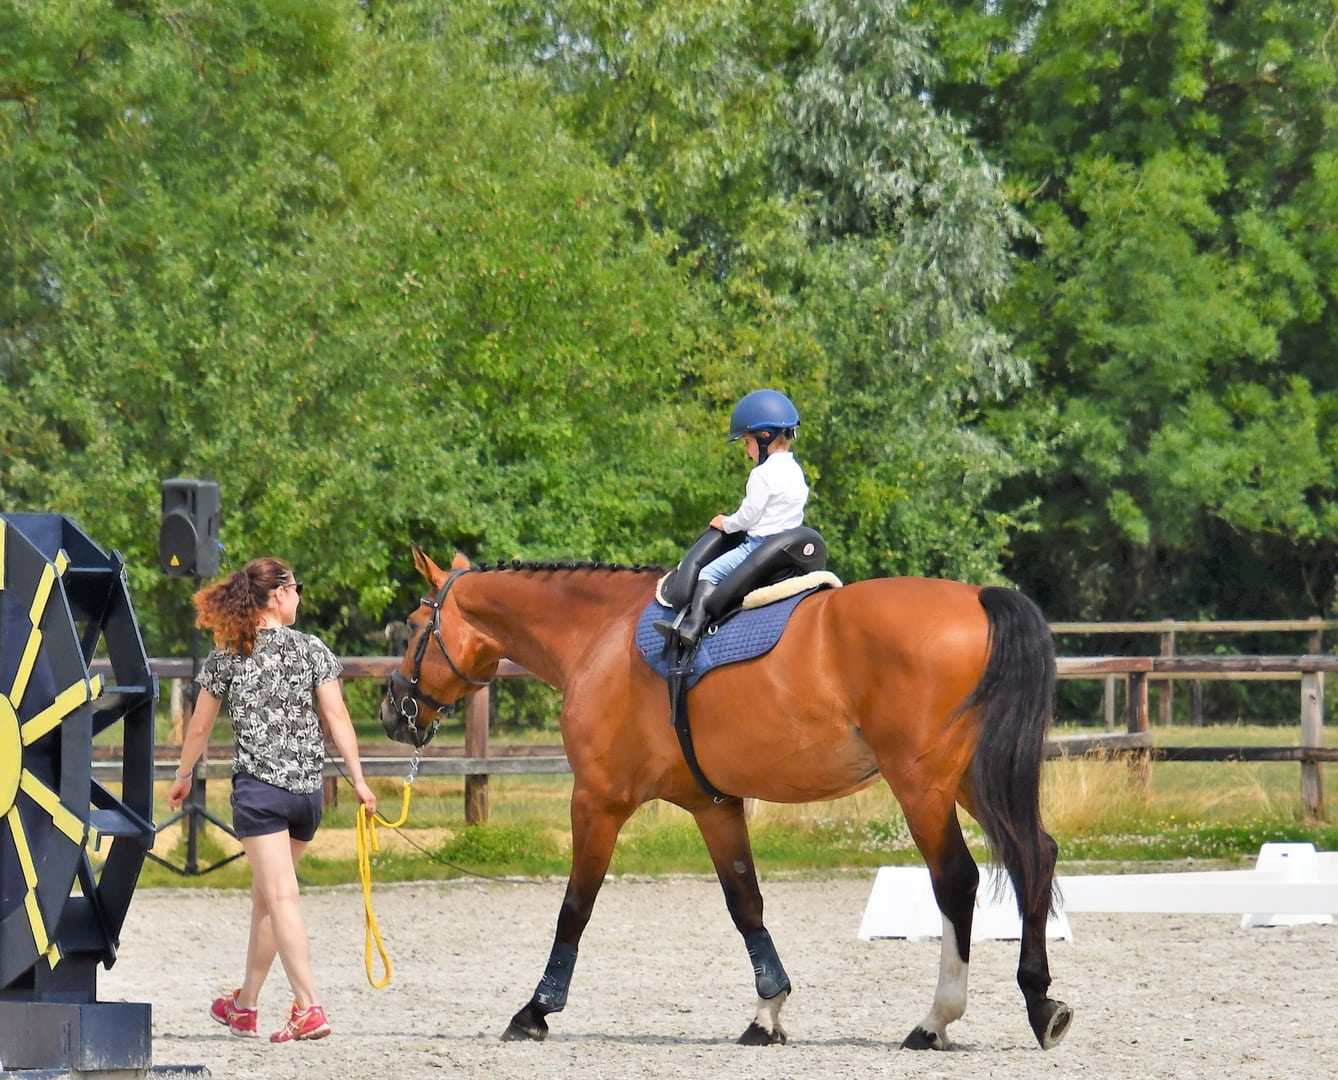 Horse Riding Lessons, 4 Leg Adventures, Kid's Horse Camps